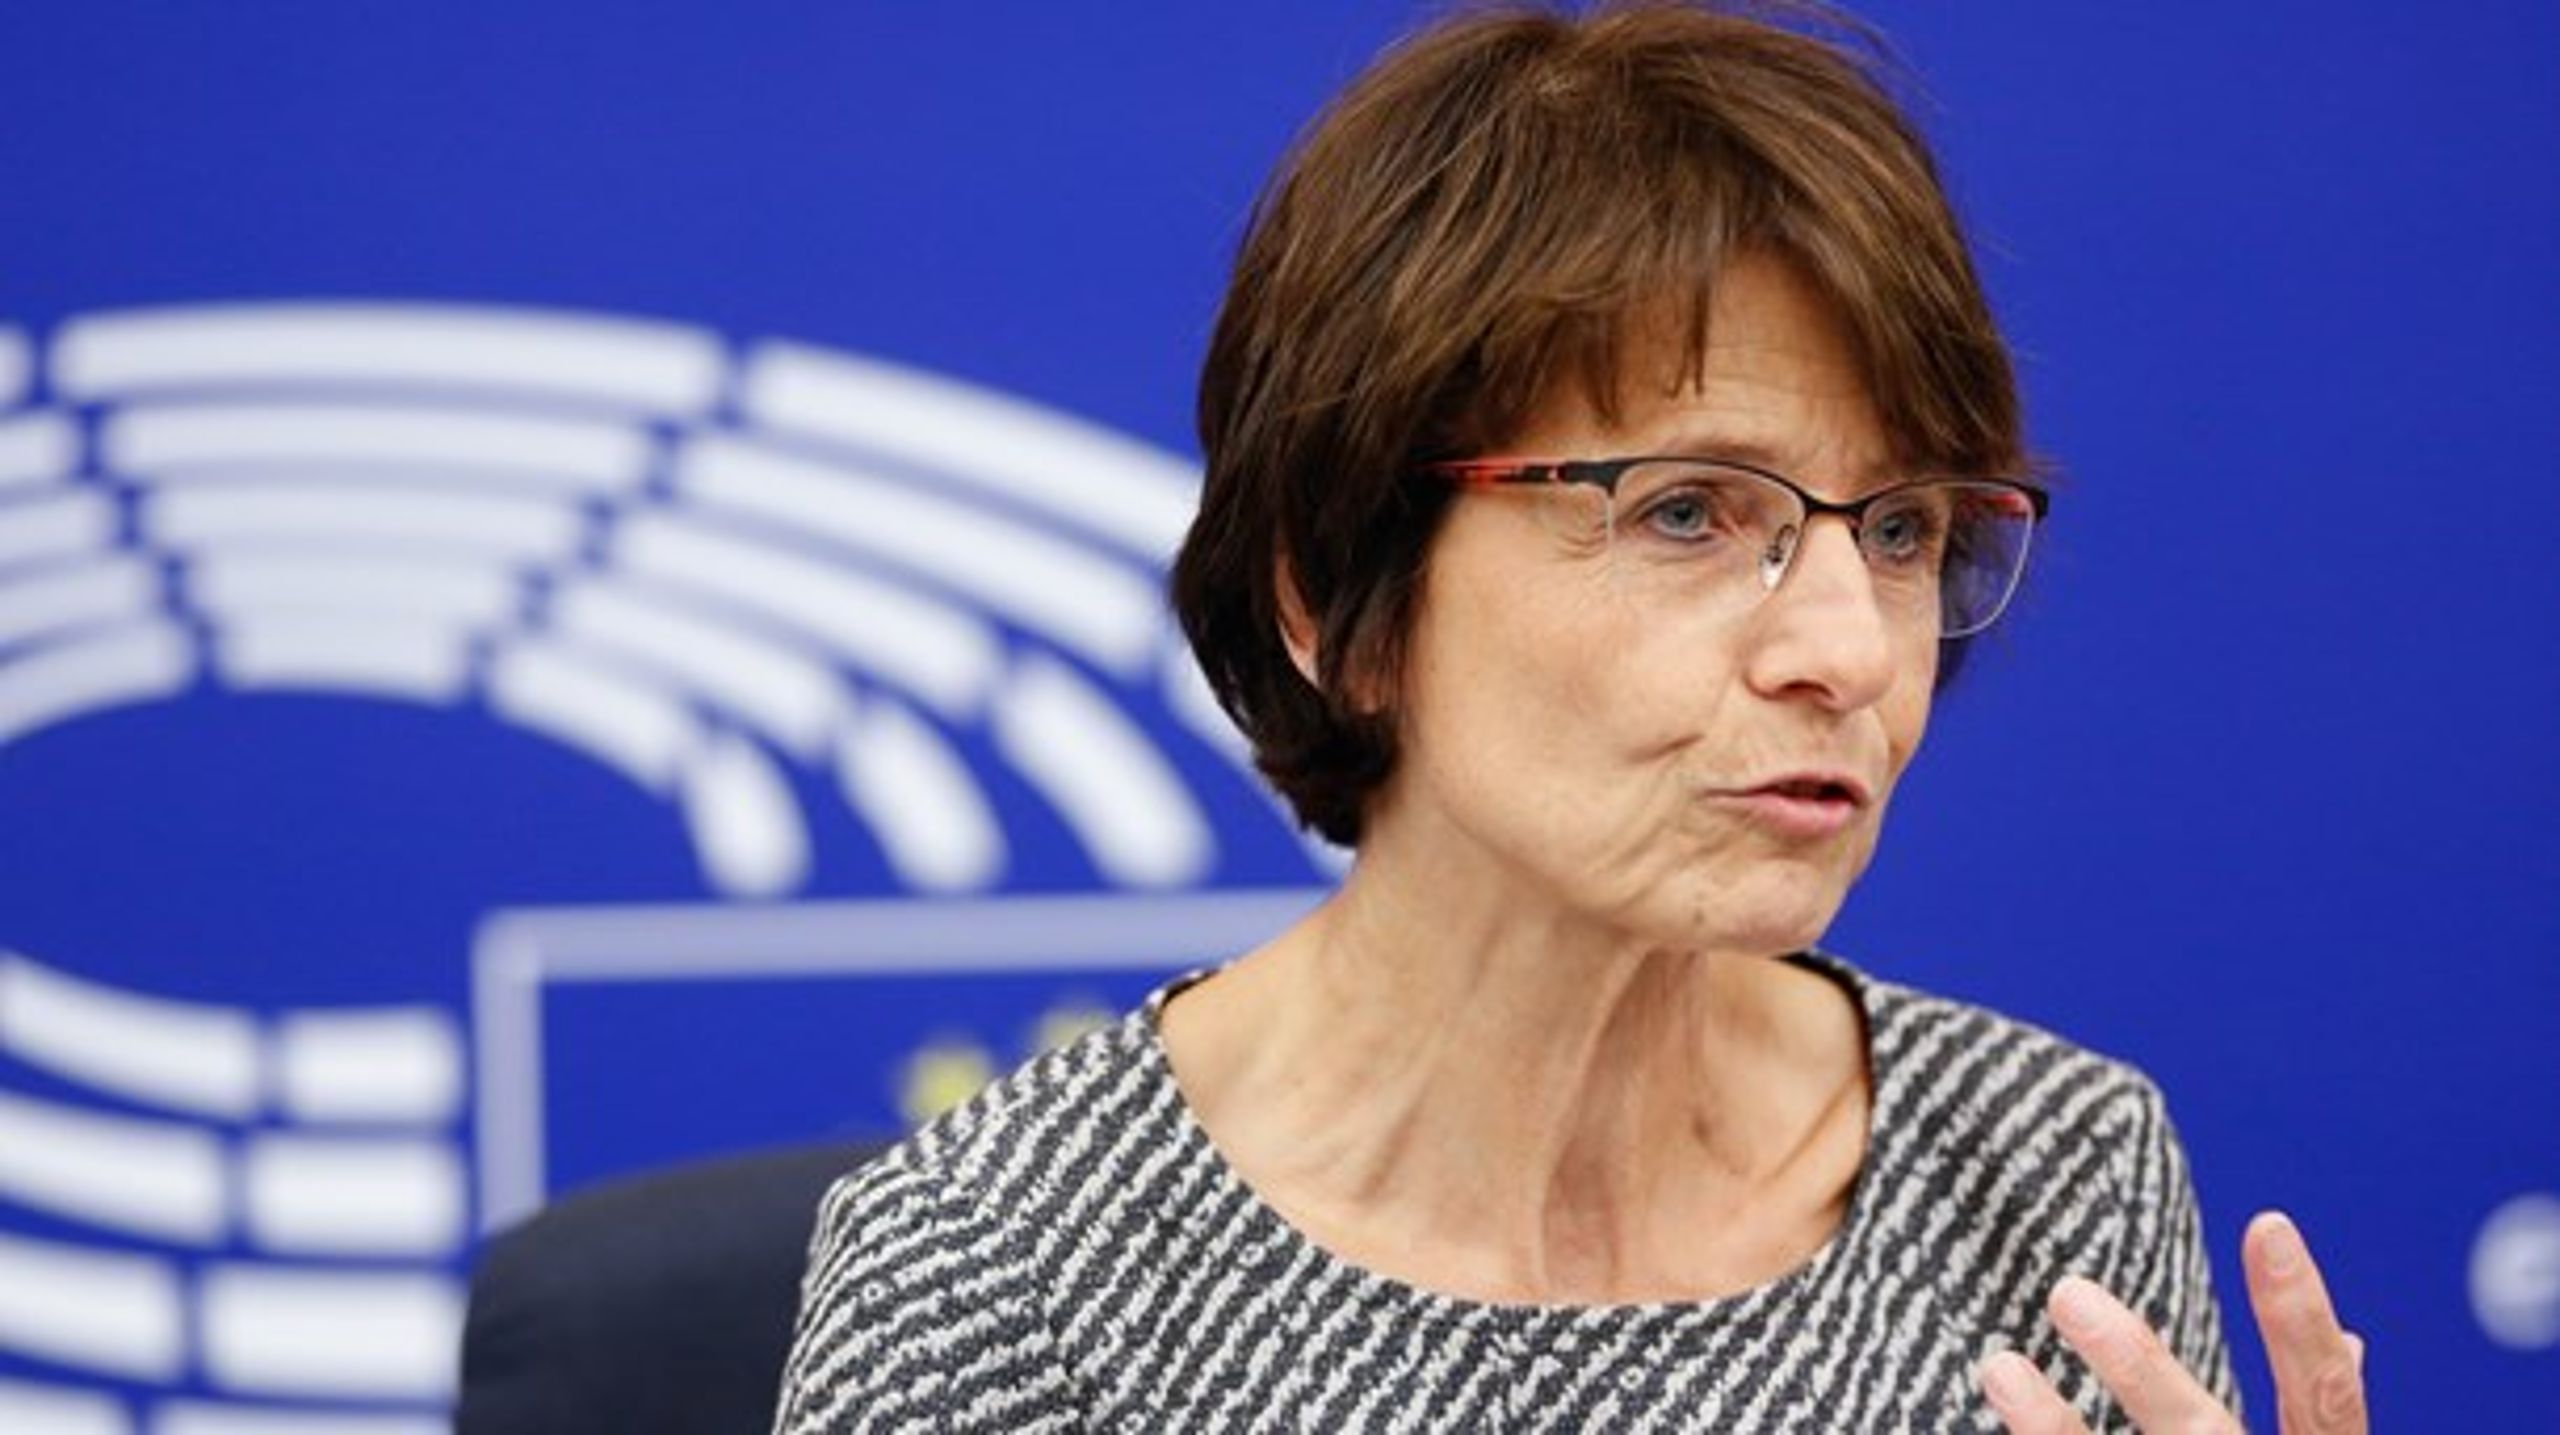 EU:s sysselsättningskommissionär Marianne Thyssen.